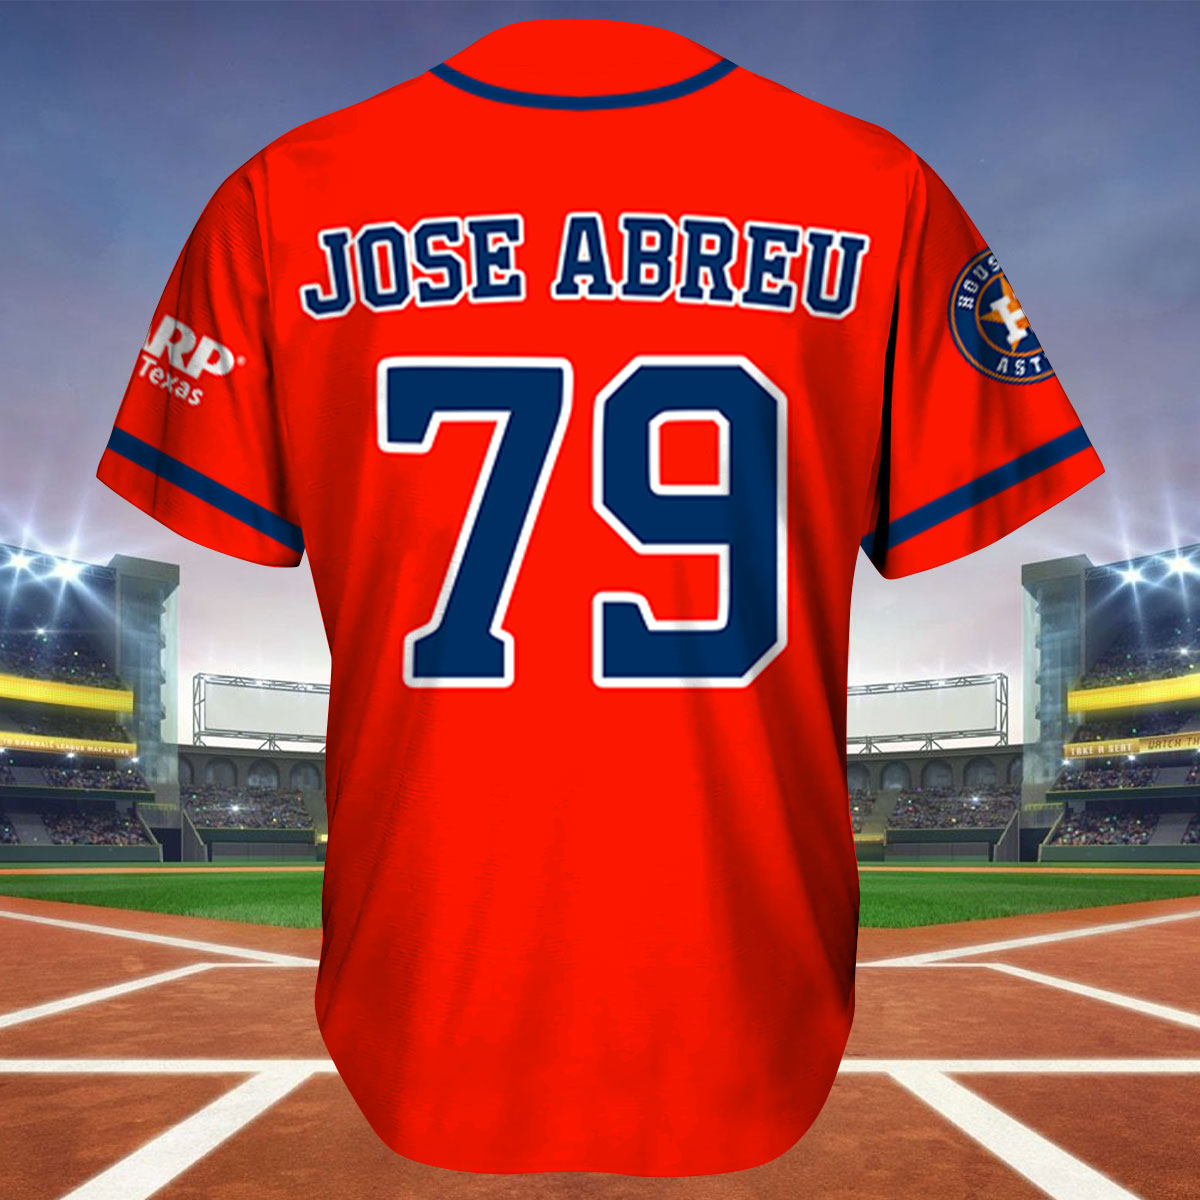 Jose Abreu Los Astros Replica Jersey Promotions 2023 Giveaway